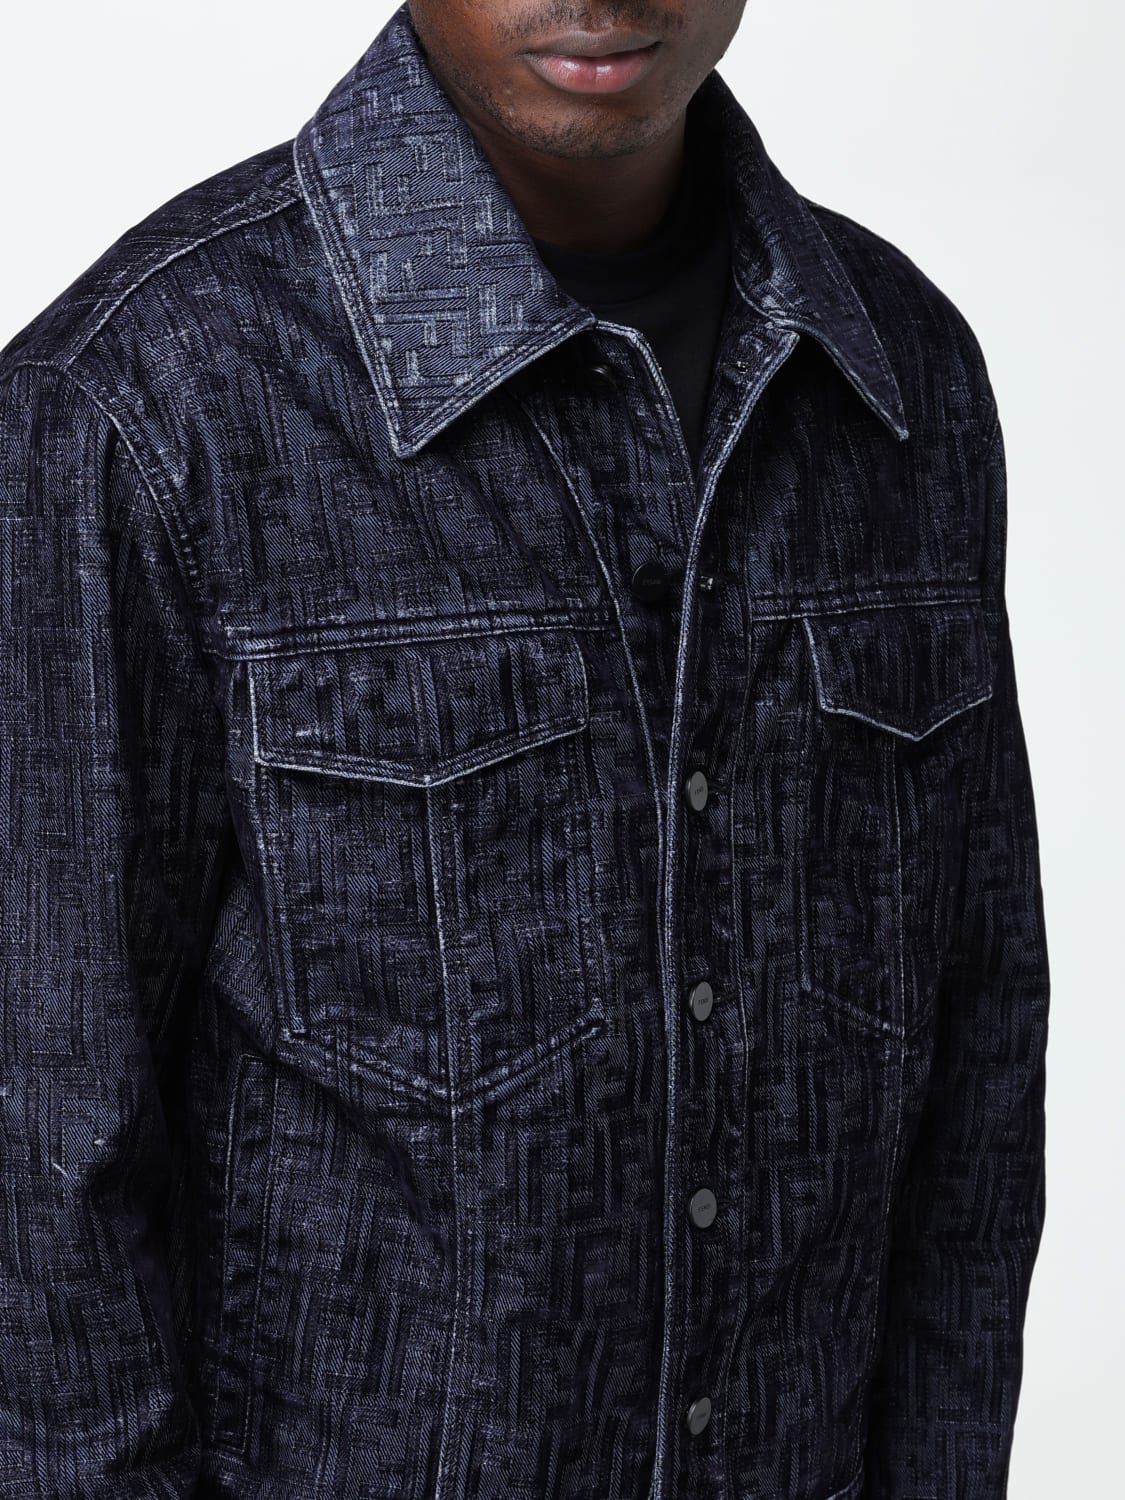 FENDI: denim jacket with all-over FF pattern - Blue | Fendi jacket ...